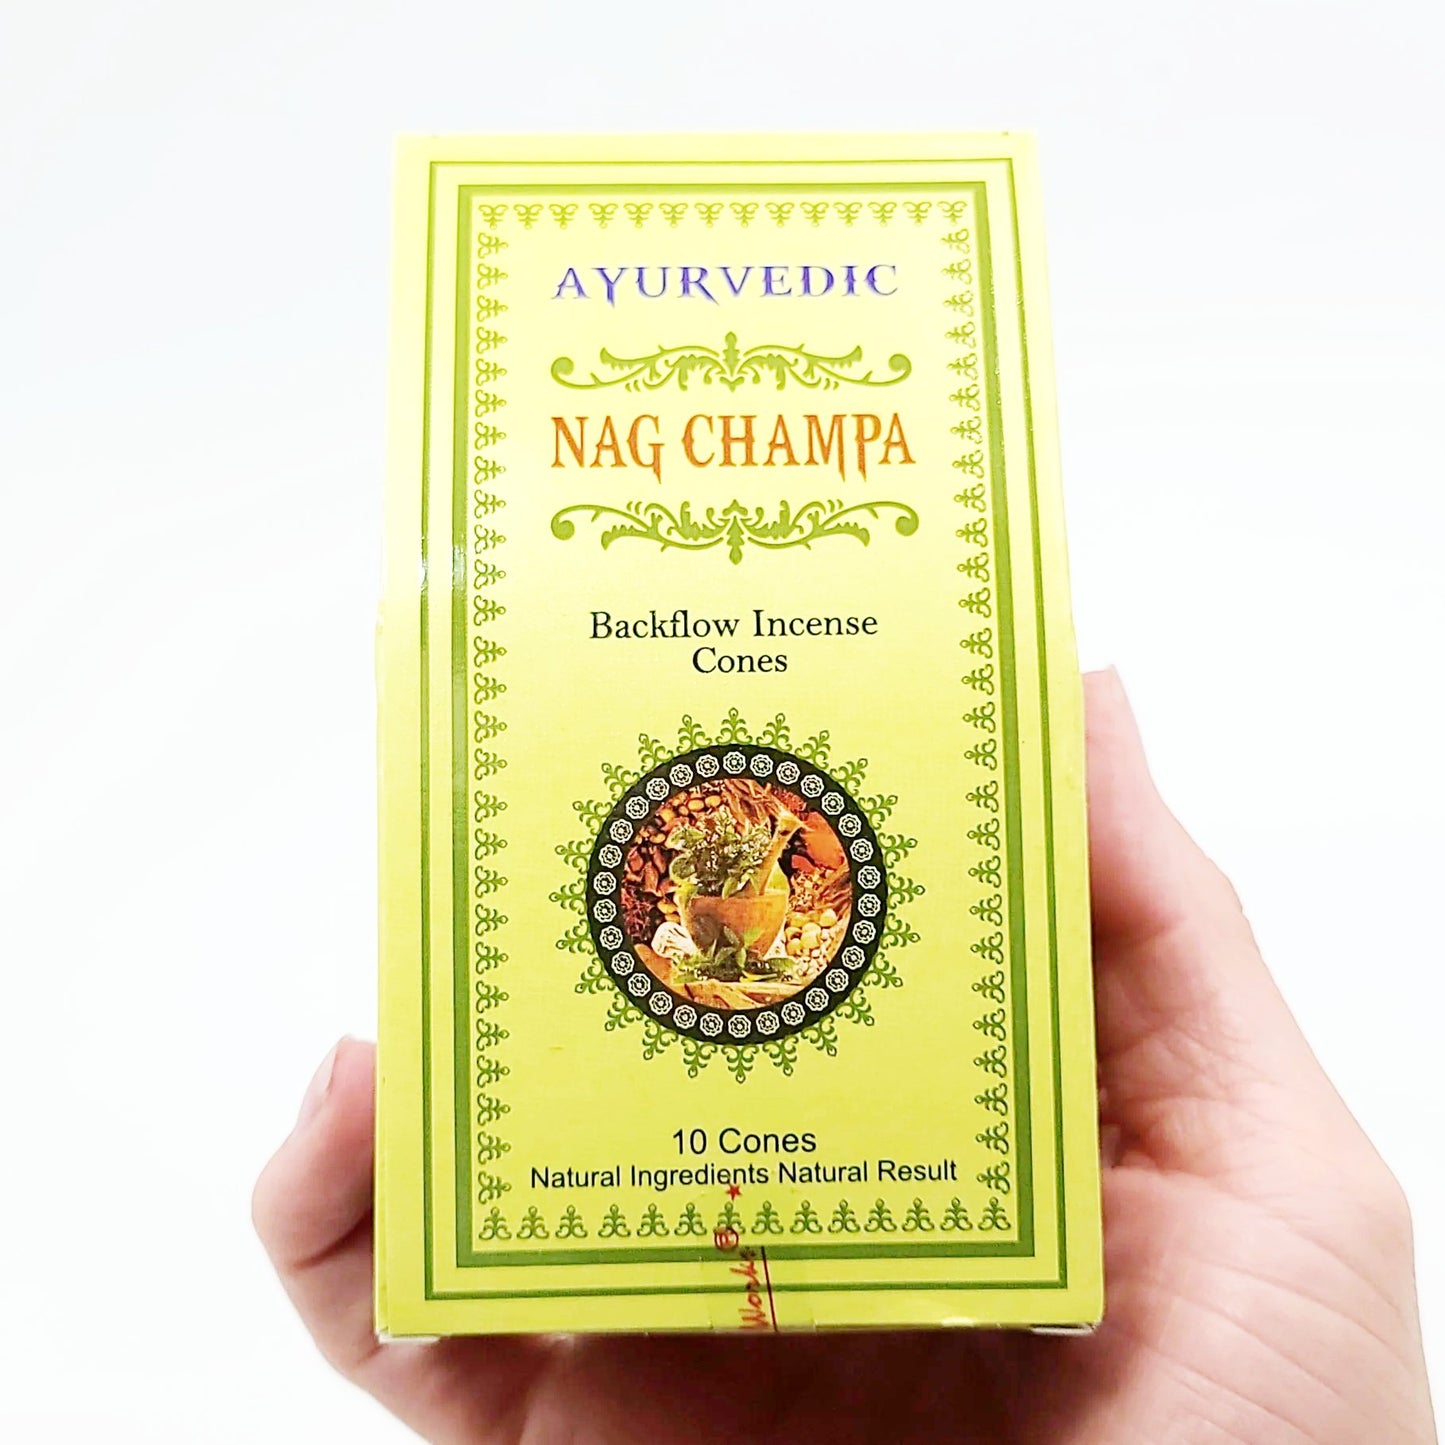 Ayurvedic Nag Champa Backflow Incense Cones 10 Pack - Elevated Metaphysical